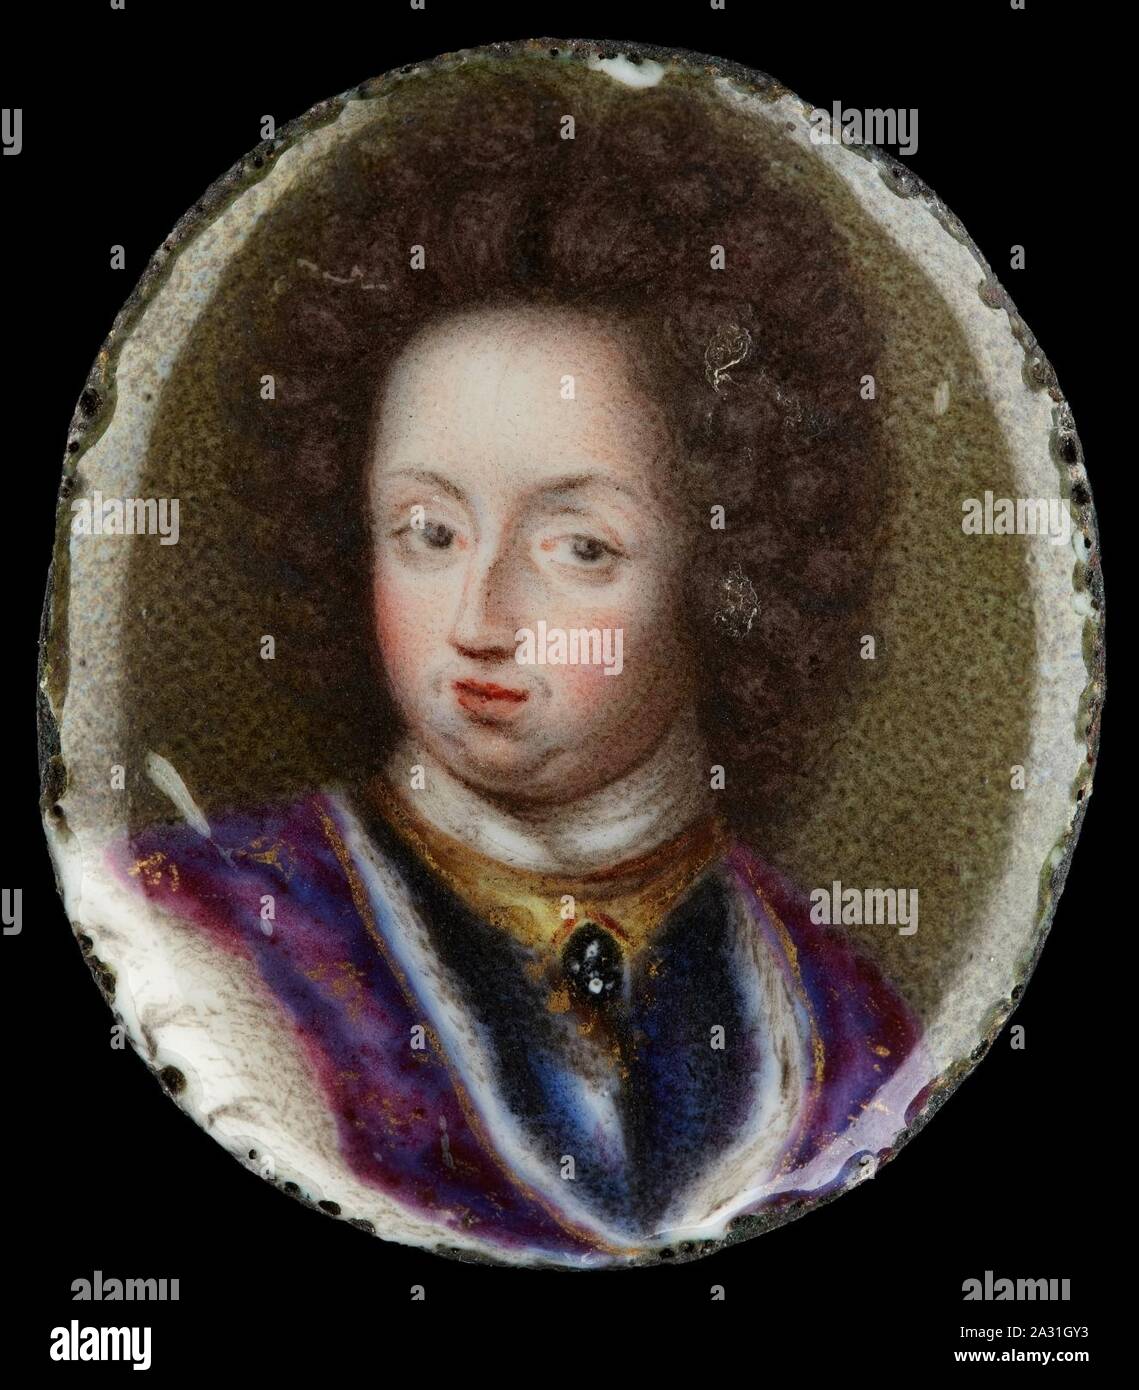 Erik Utterhielm - Miniatura retrato de Carlos XI, Rey de Suecia - 1660-1697 Foto de stock